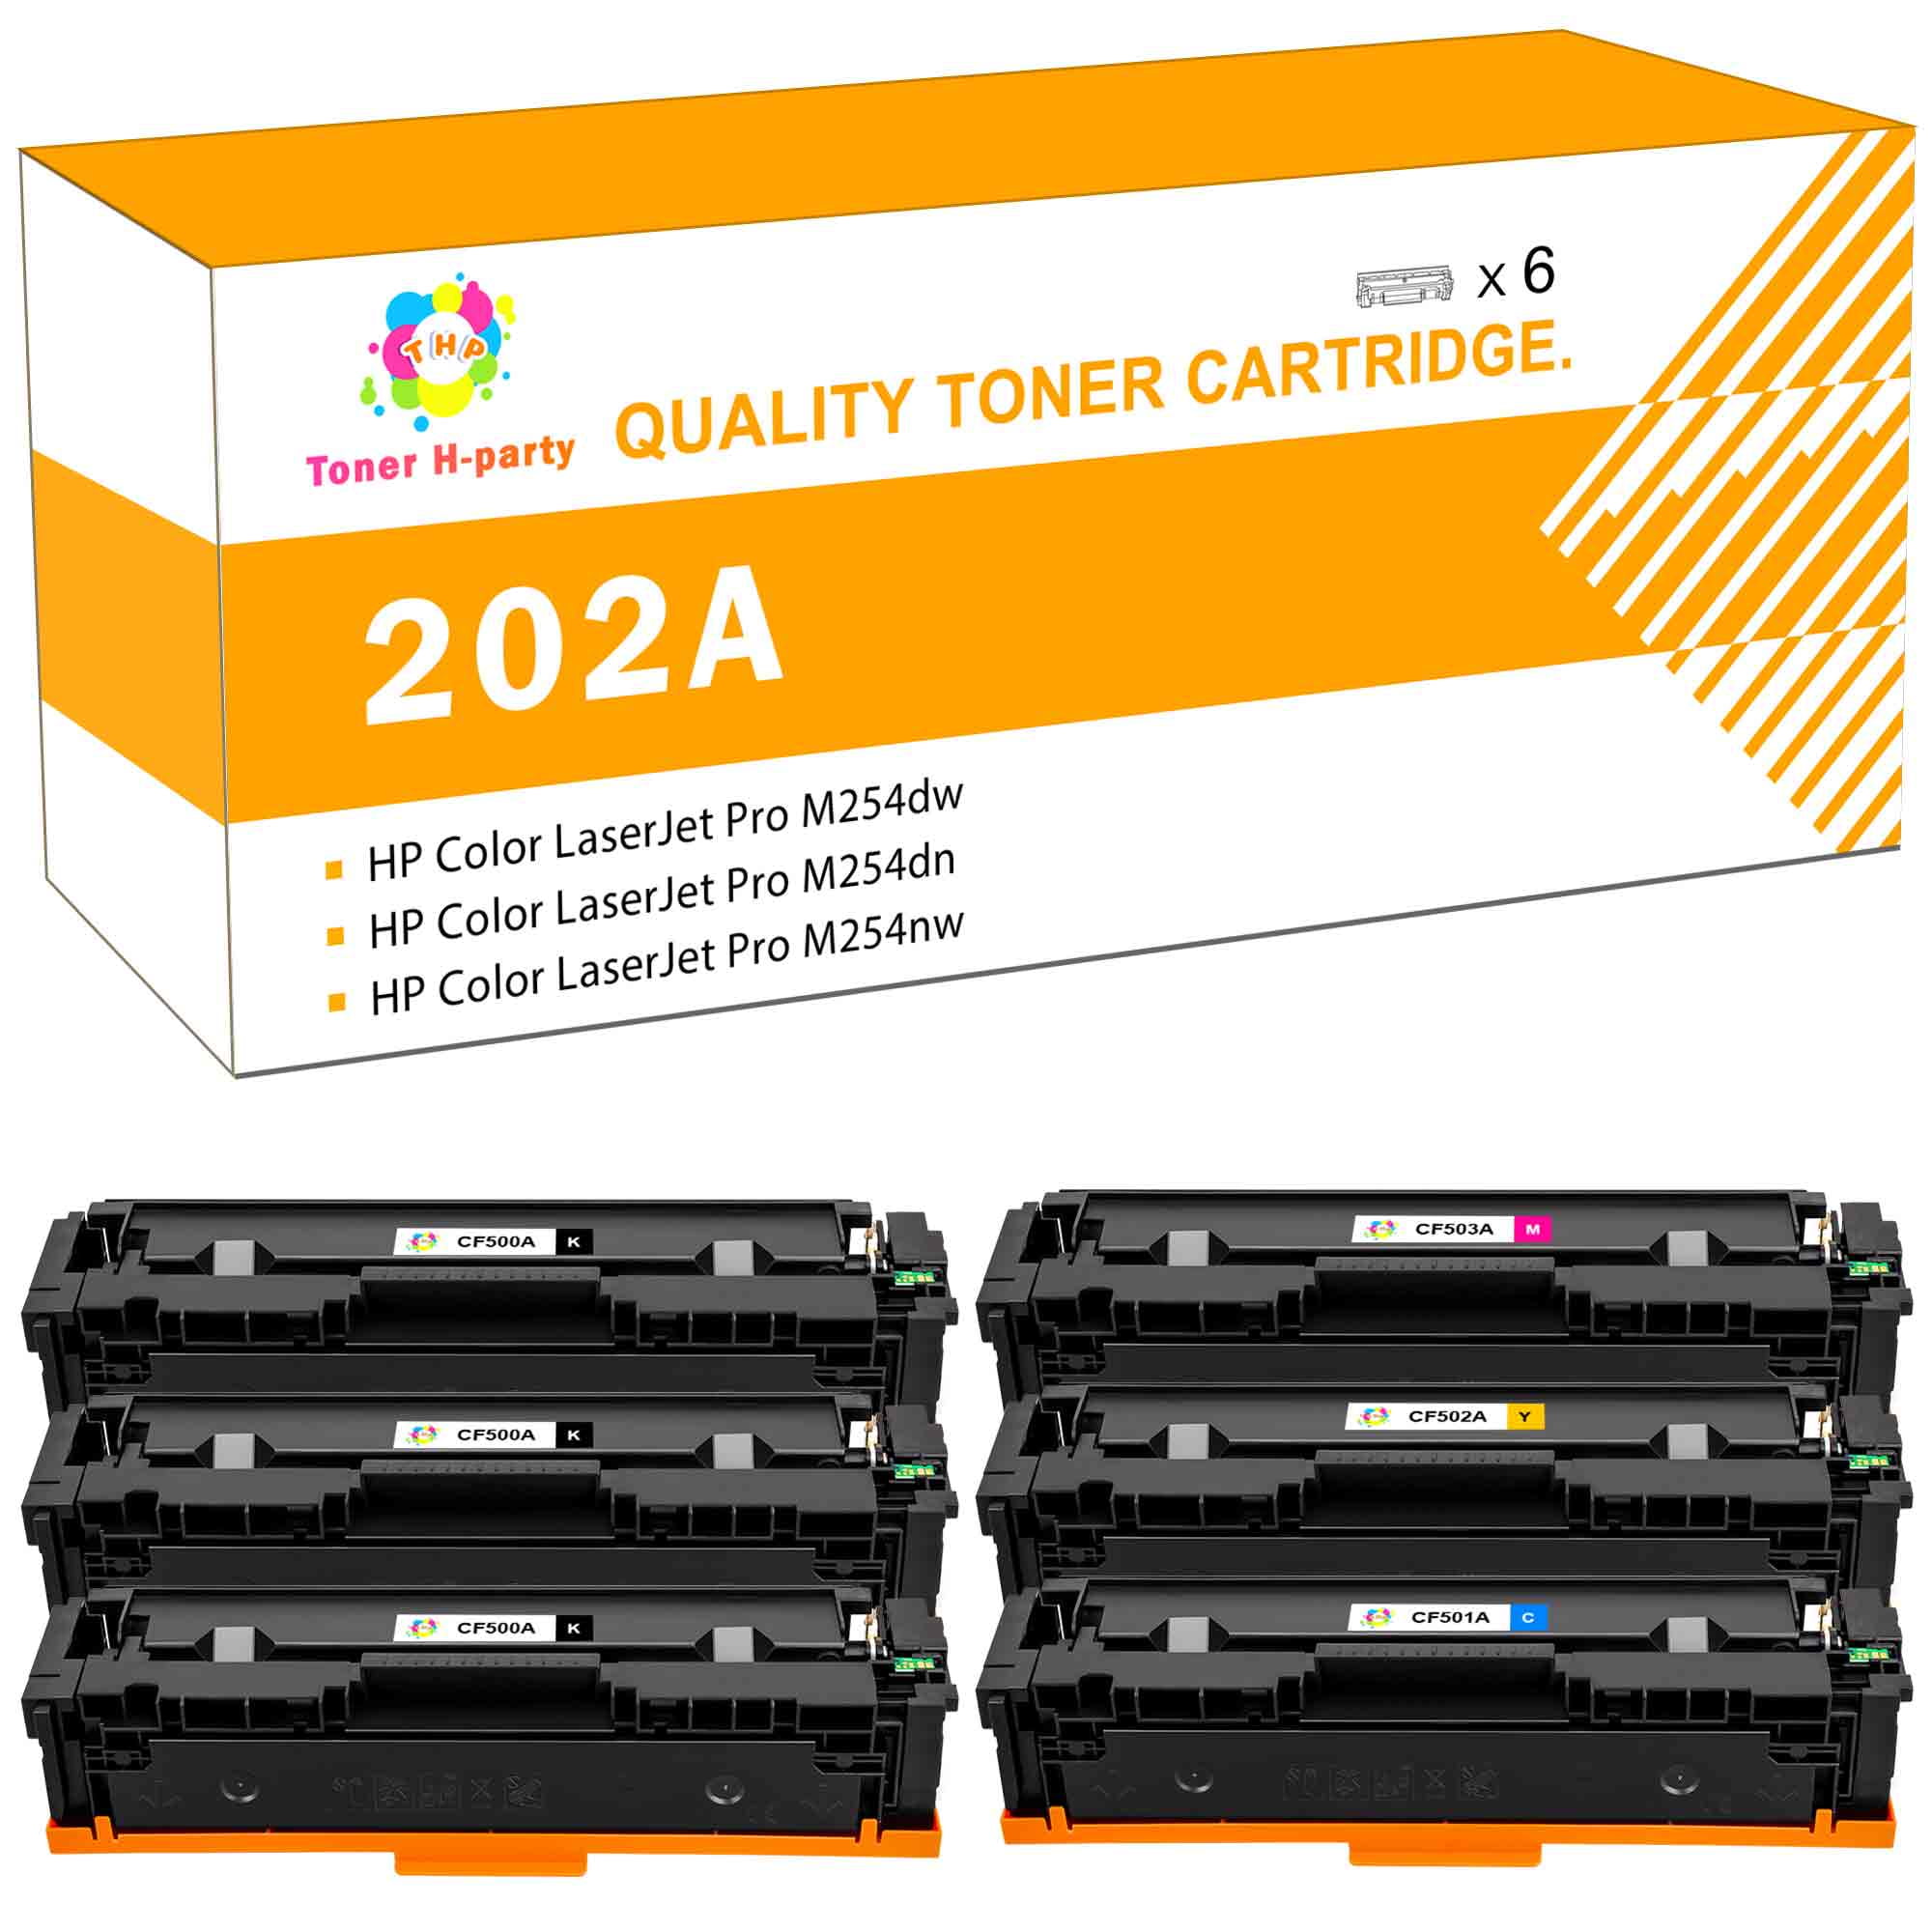 Toner H-Party 8-Pack Compatible Toner Cartridge for HP 202A CF500A CF501A CF503A Color LaserJet Pro M254dw Printer Ink (2*Black,2*Cyan,2*Magenta,2*Yellow) - Walmart.com